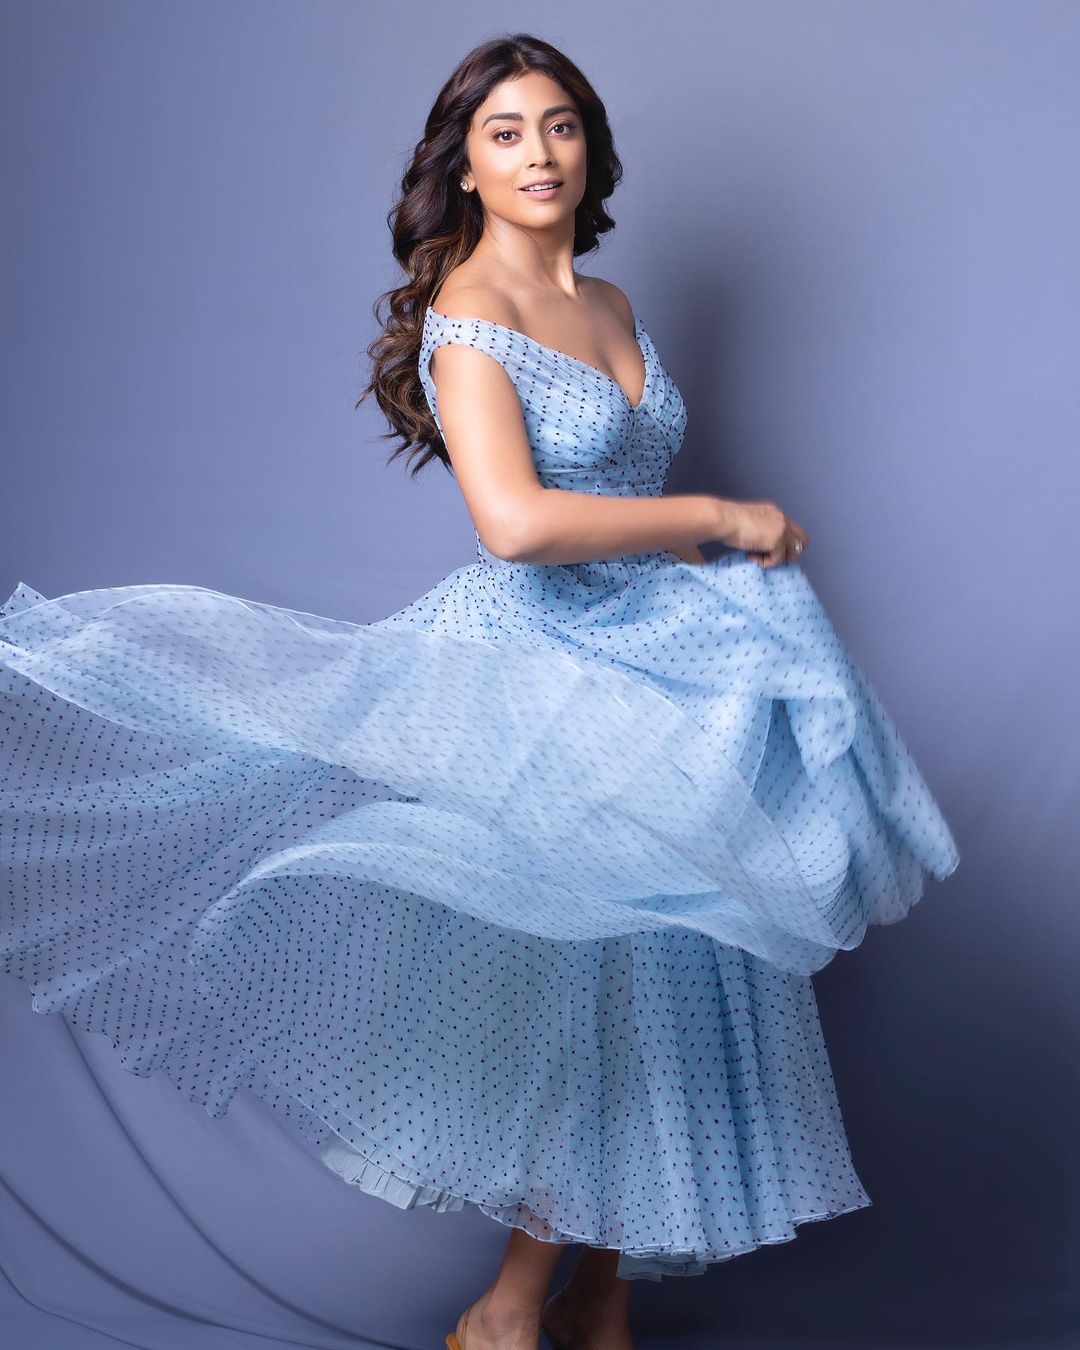 shriya saran hot photos showing glamour gown